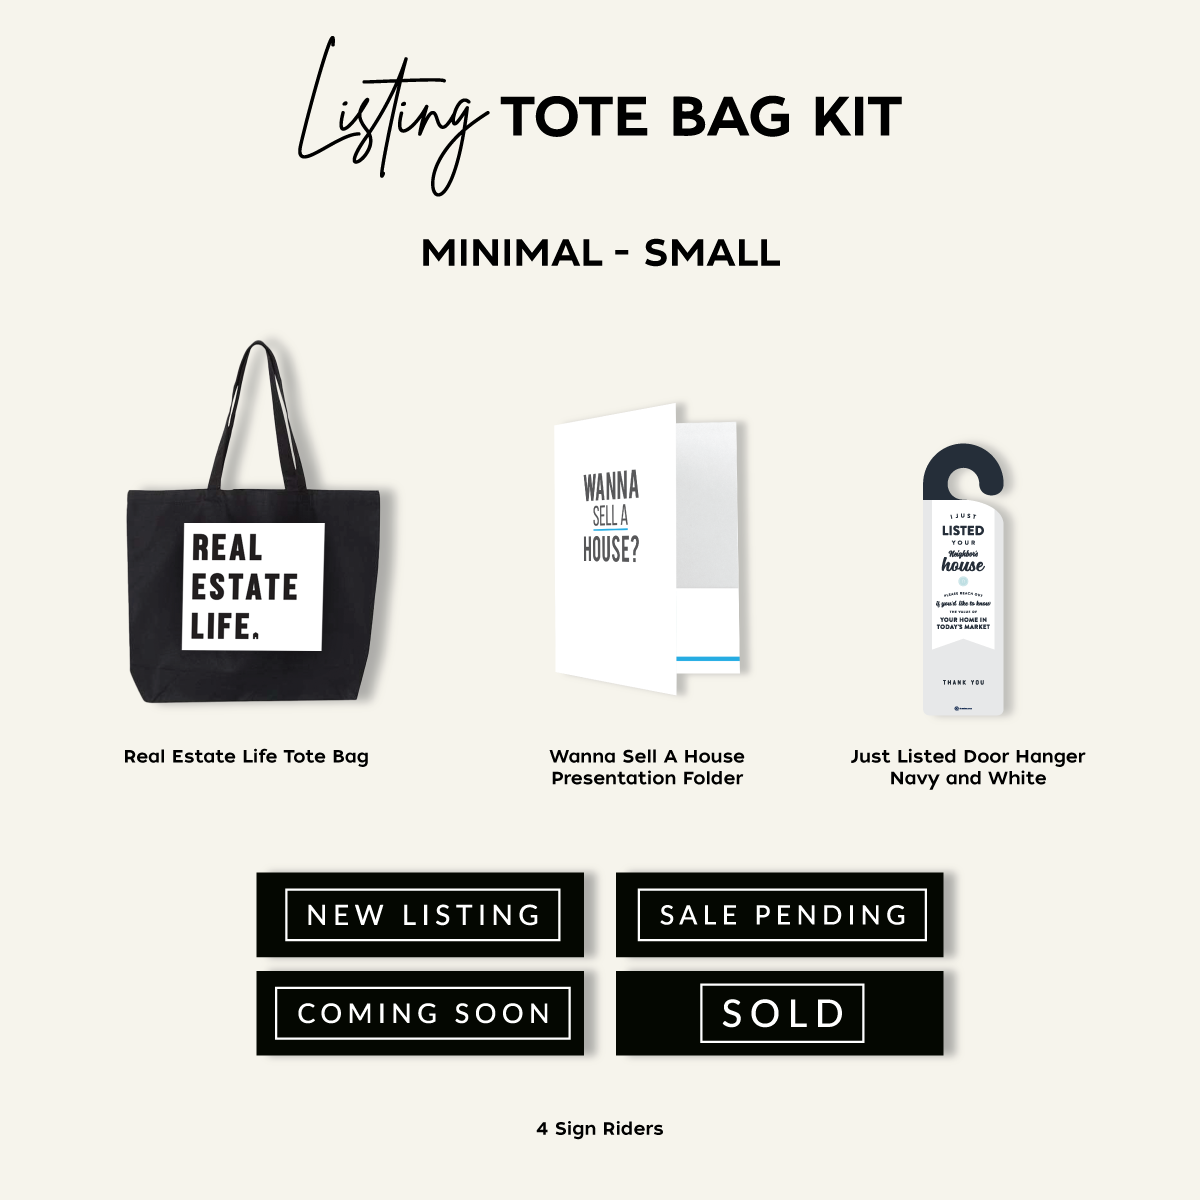 Listing Tote Bag Kit- Small (Minimal)